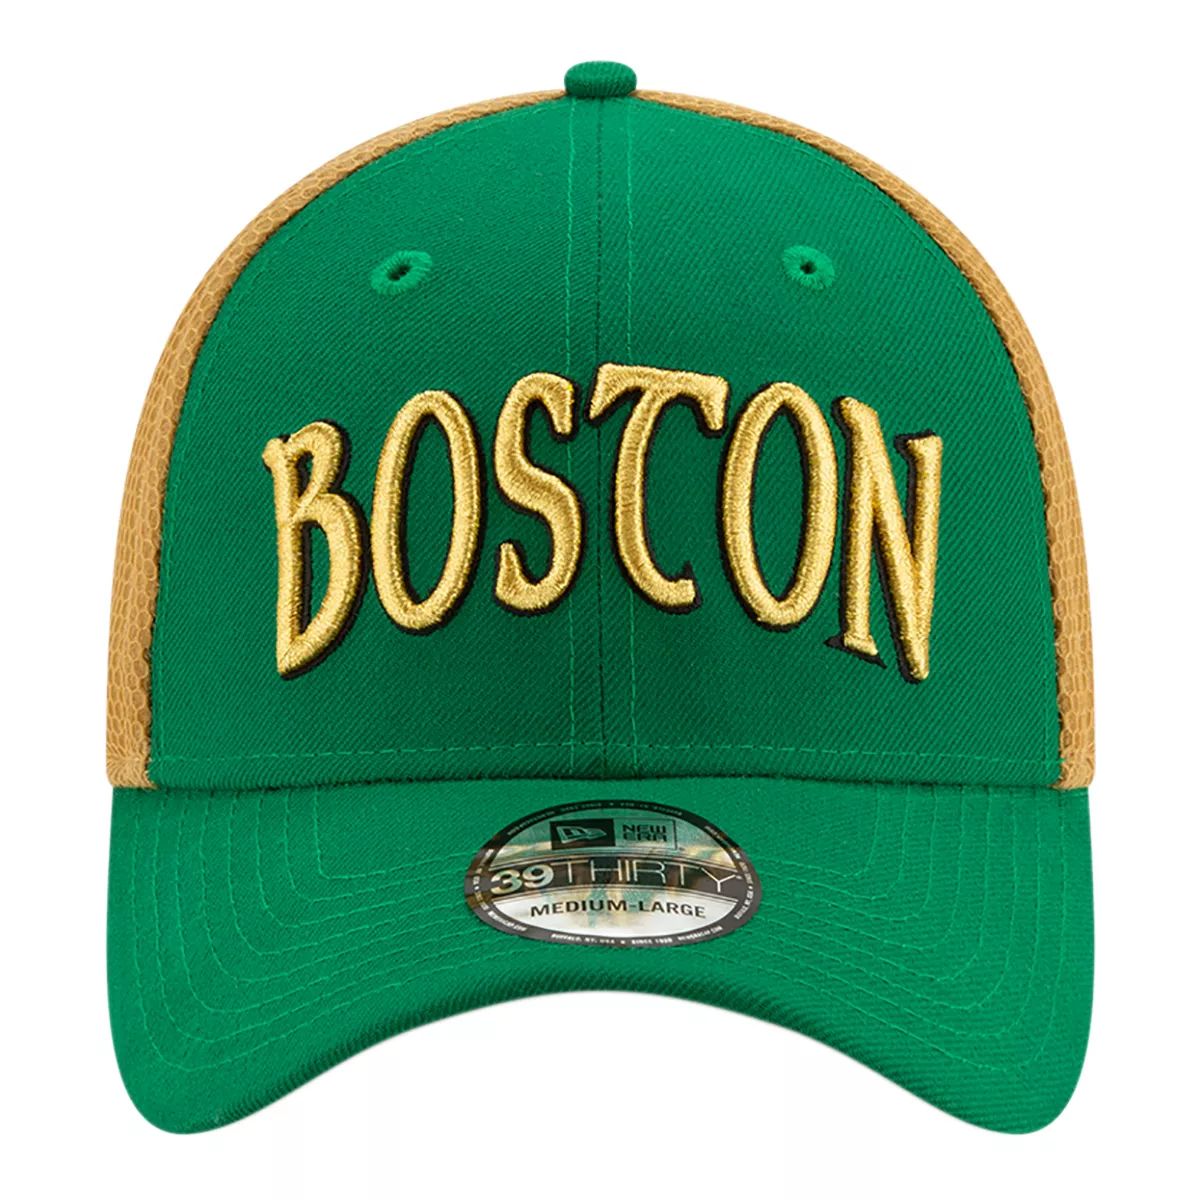 NEW Boston Celtics Hat Flex-Fit Fitted Size Small/Medium NBA Basketball Cap